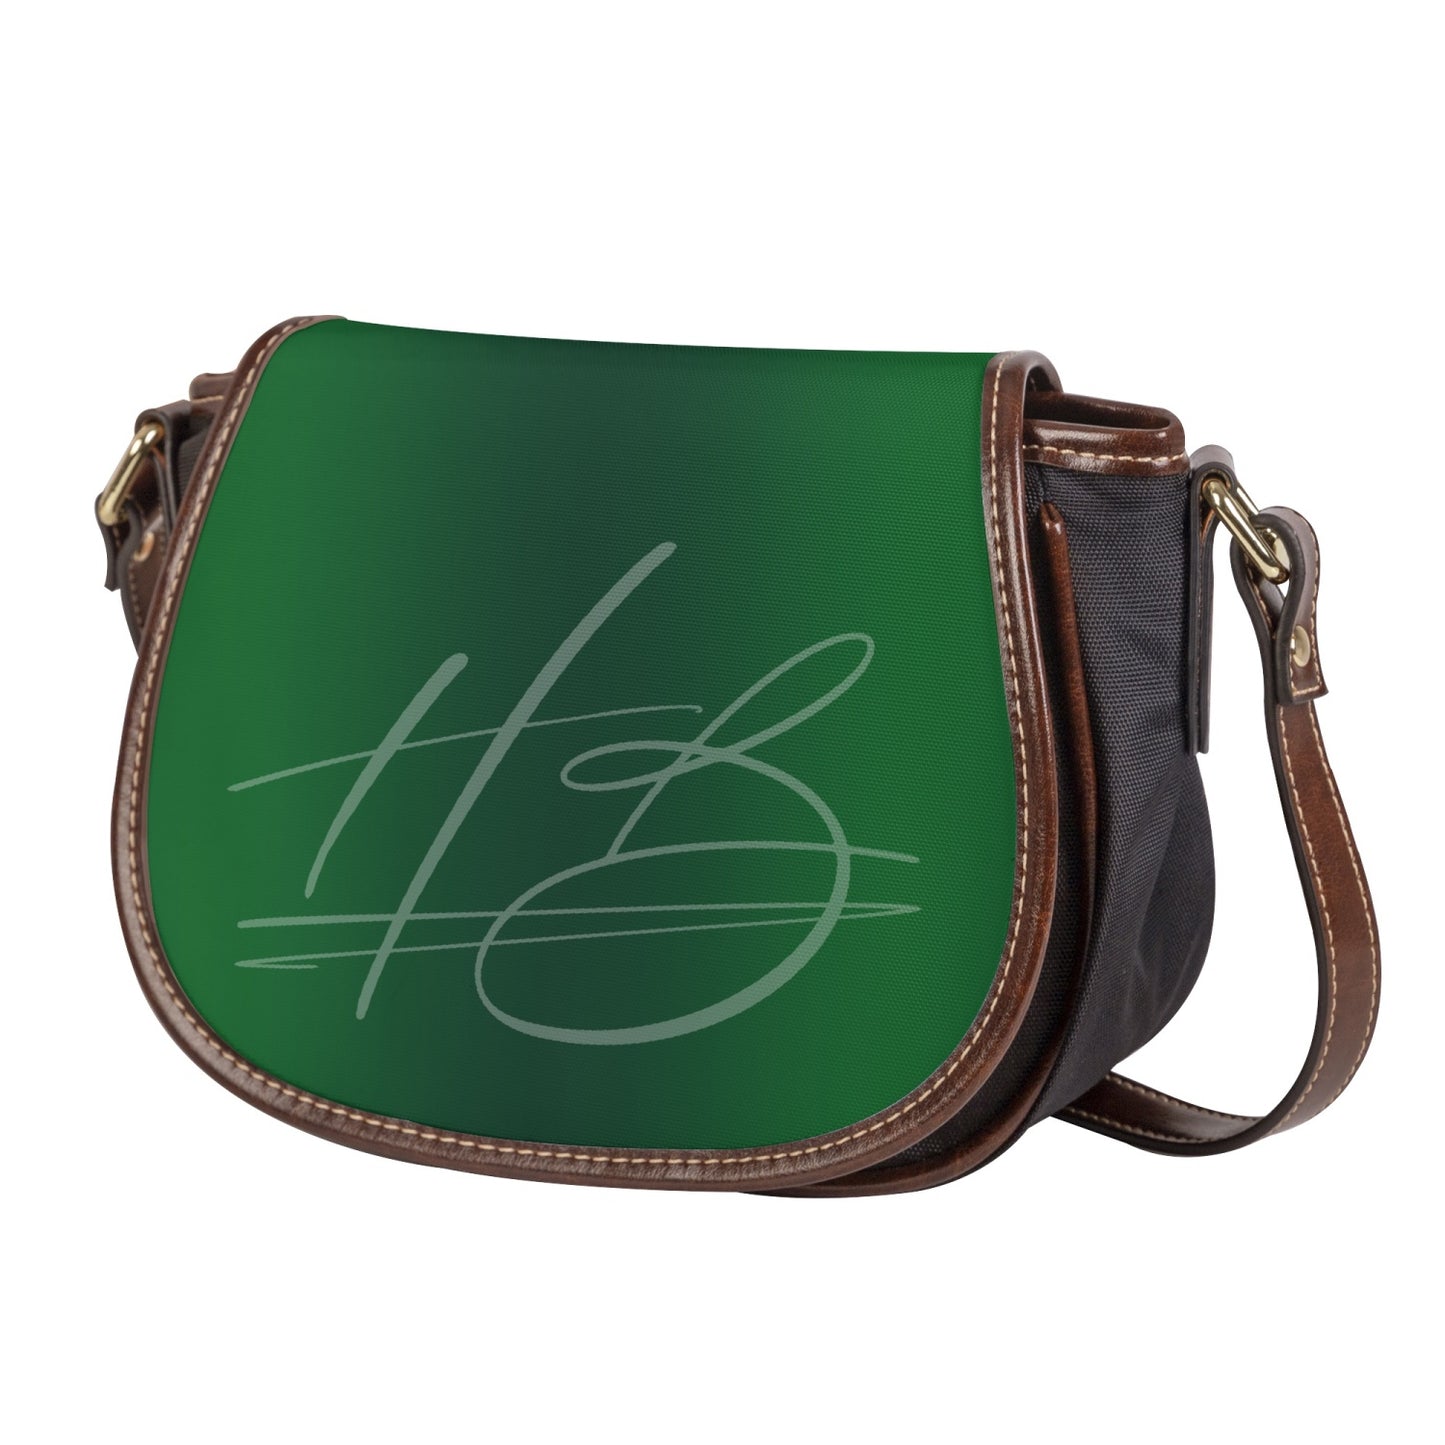 Harlem Boy Collection Vegan Leather Flap Saddle Bag - Emerald